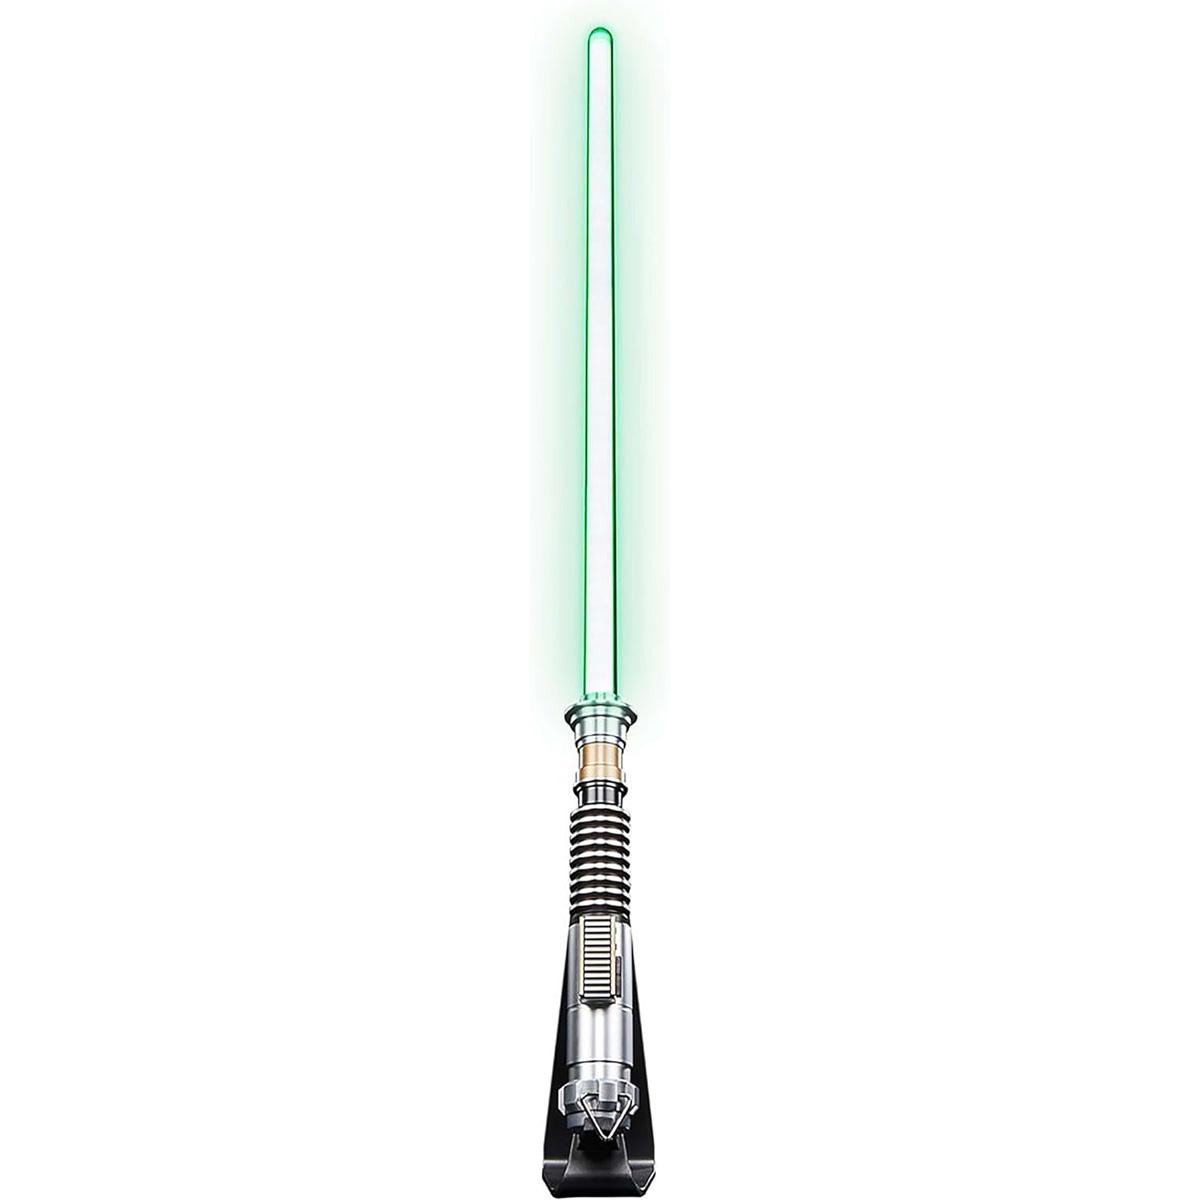 Star Wars The Black Series Force FX Elite Lightsaber for $164.99 Shipped